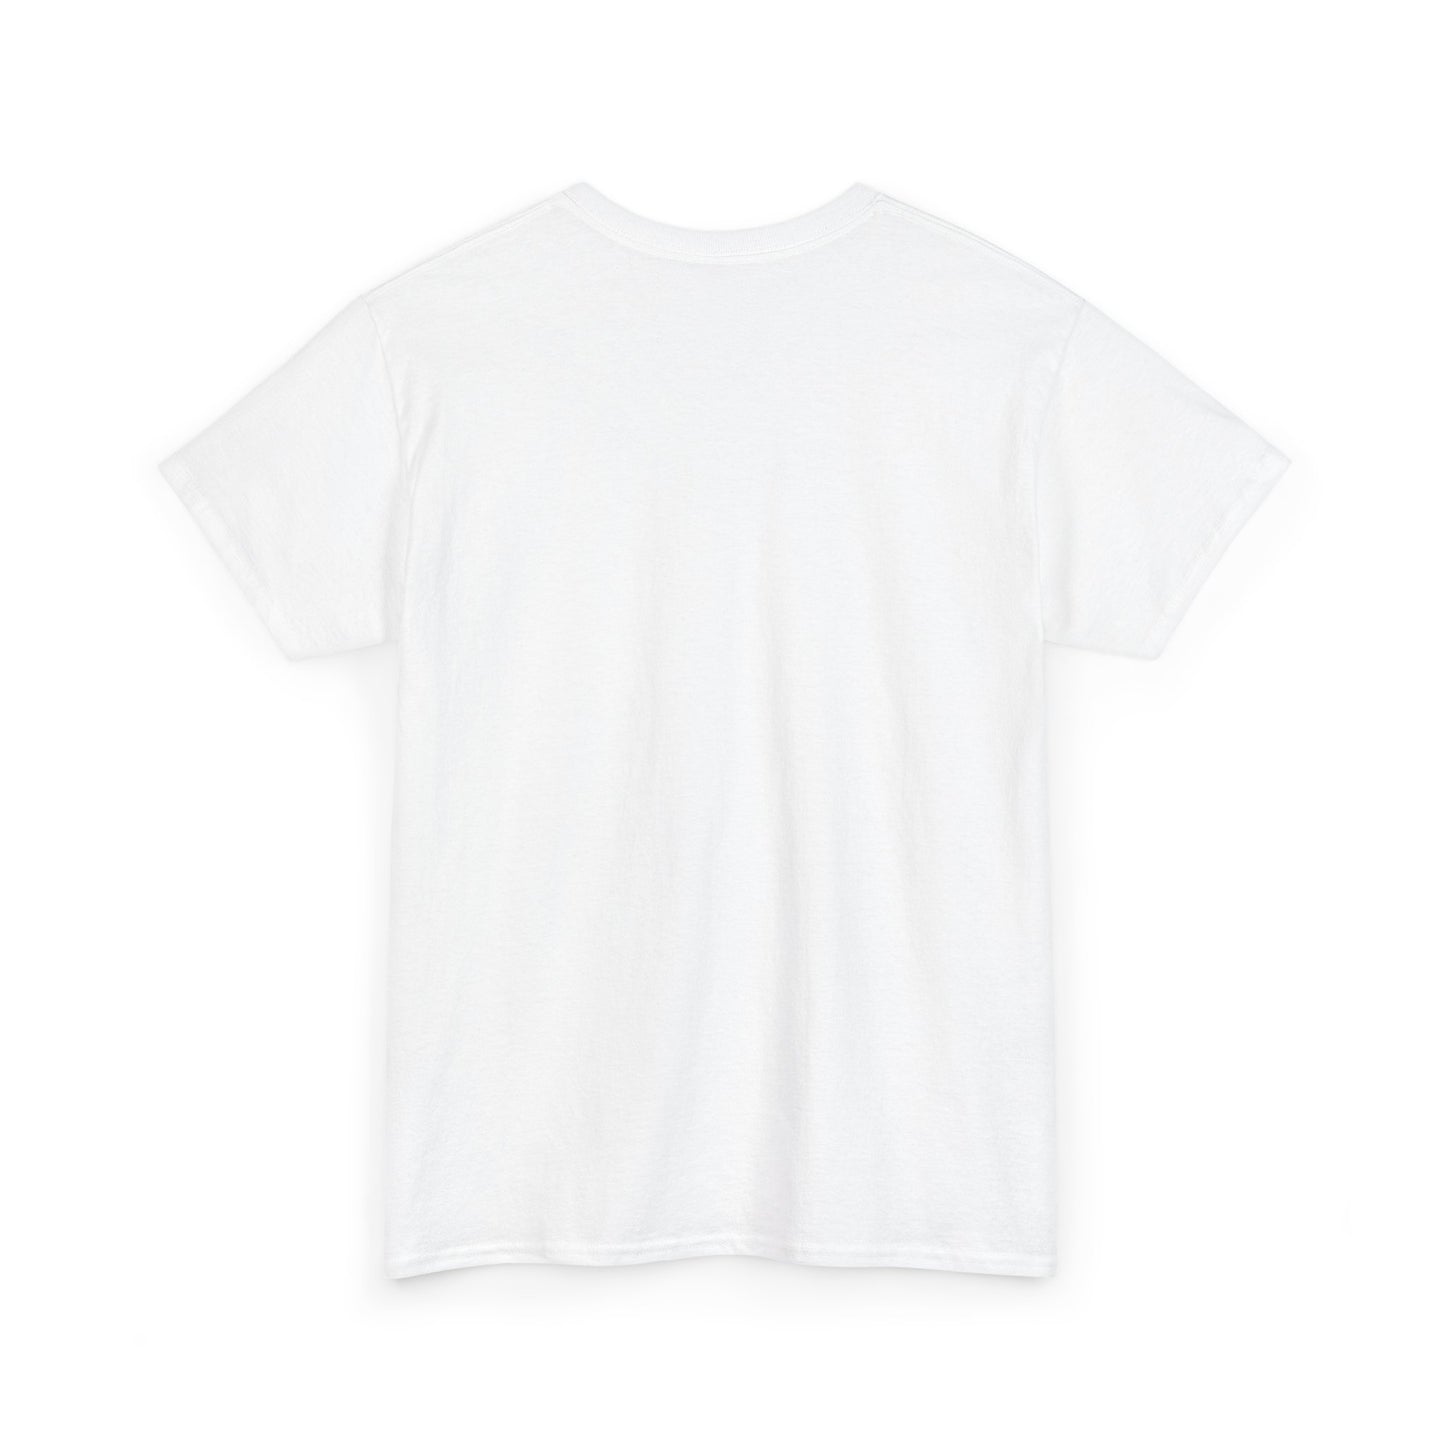 Unisex Charles Leclerc T-Shirt